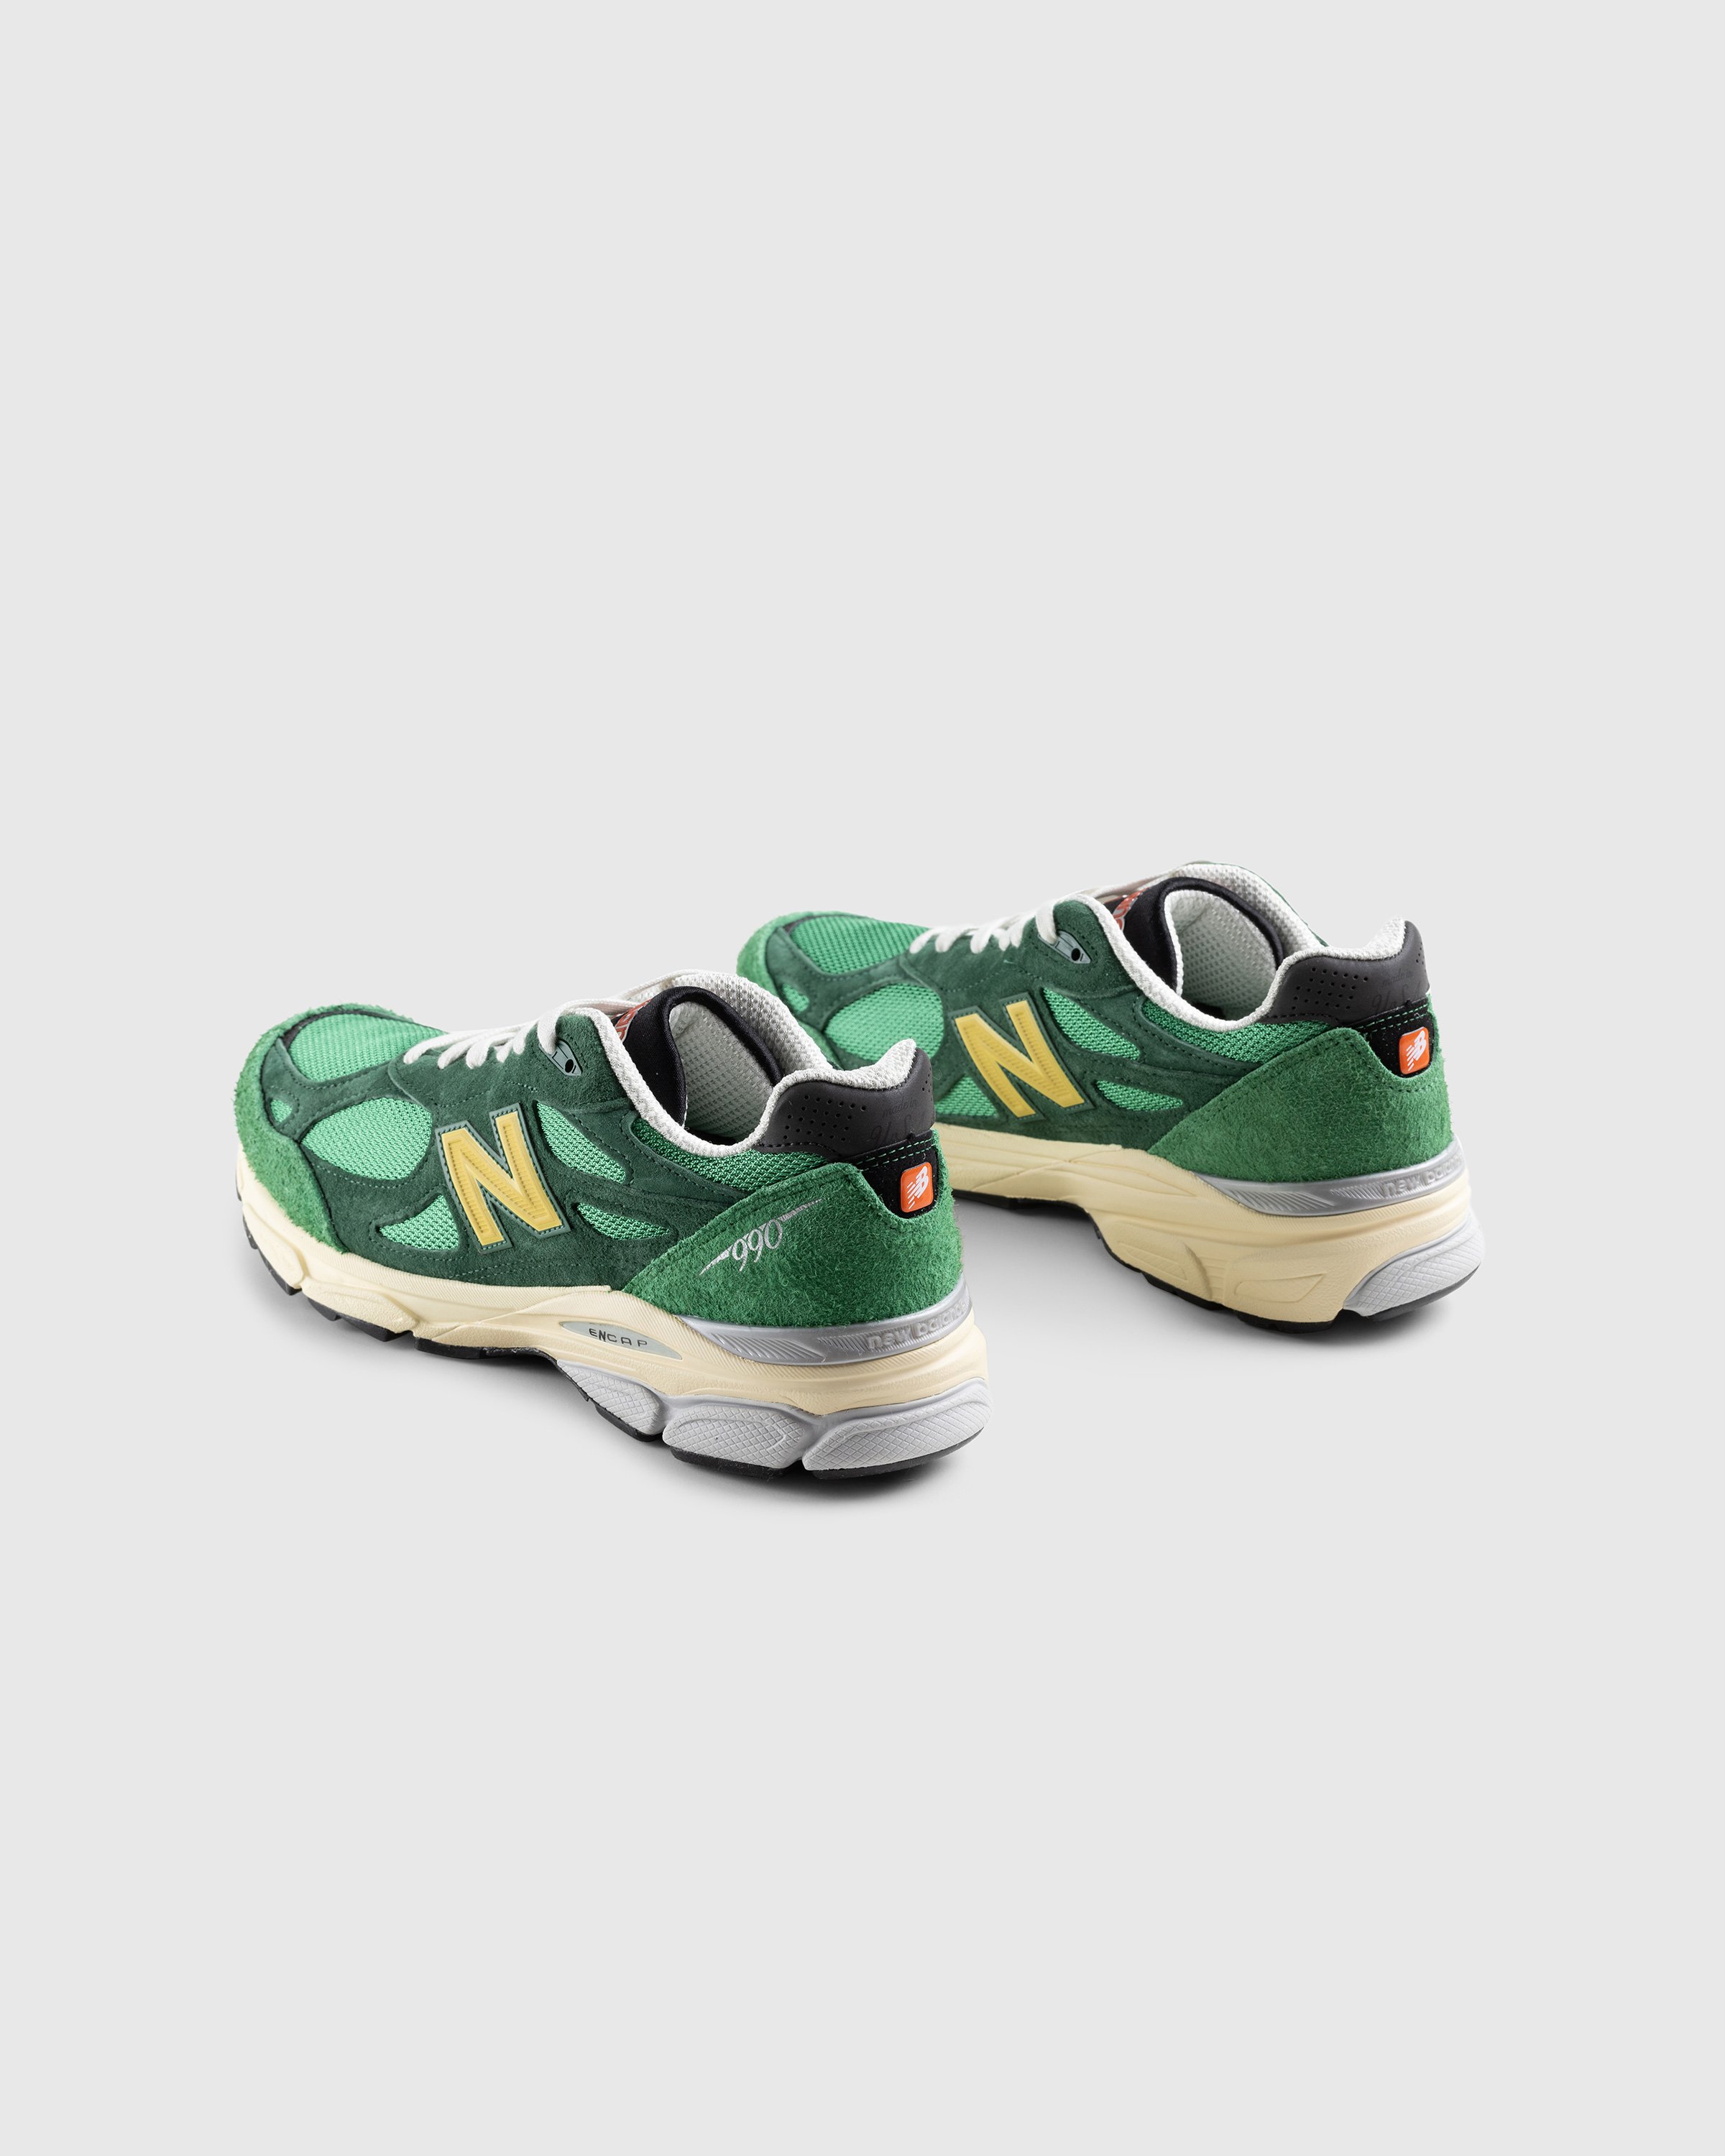 New Balance - M990GG3 Green - Footwear - Green - Image 4